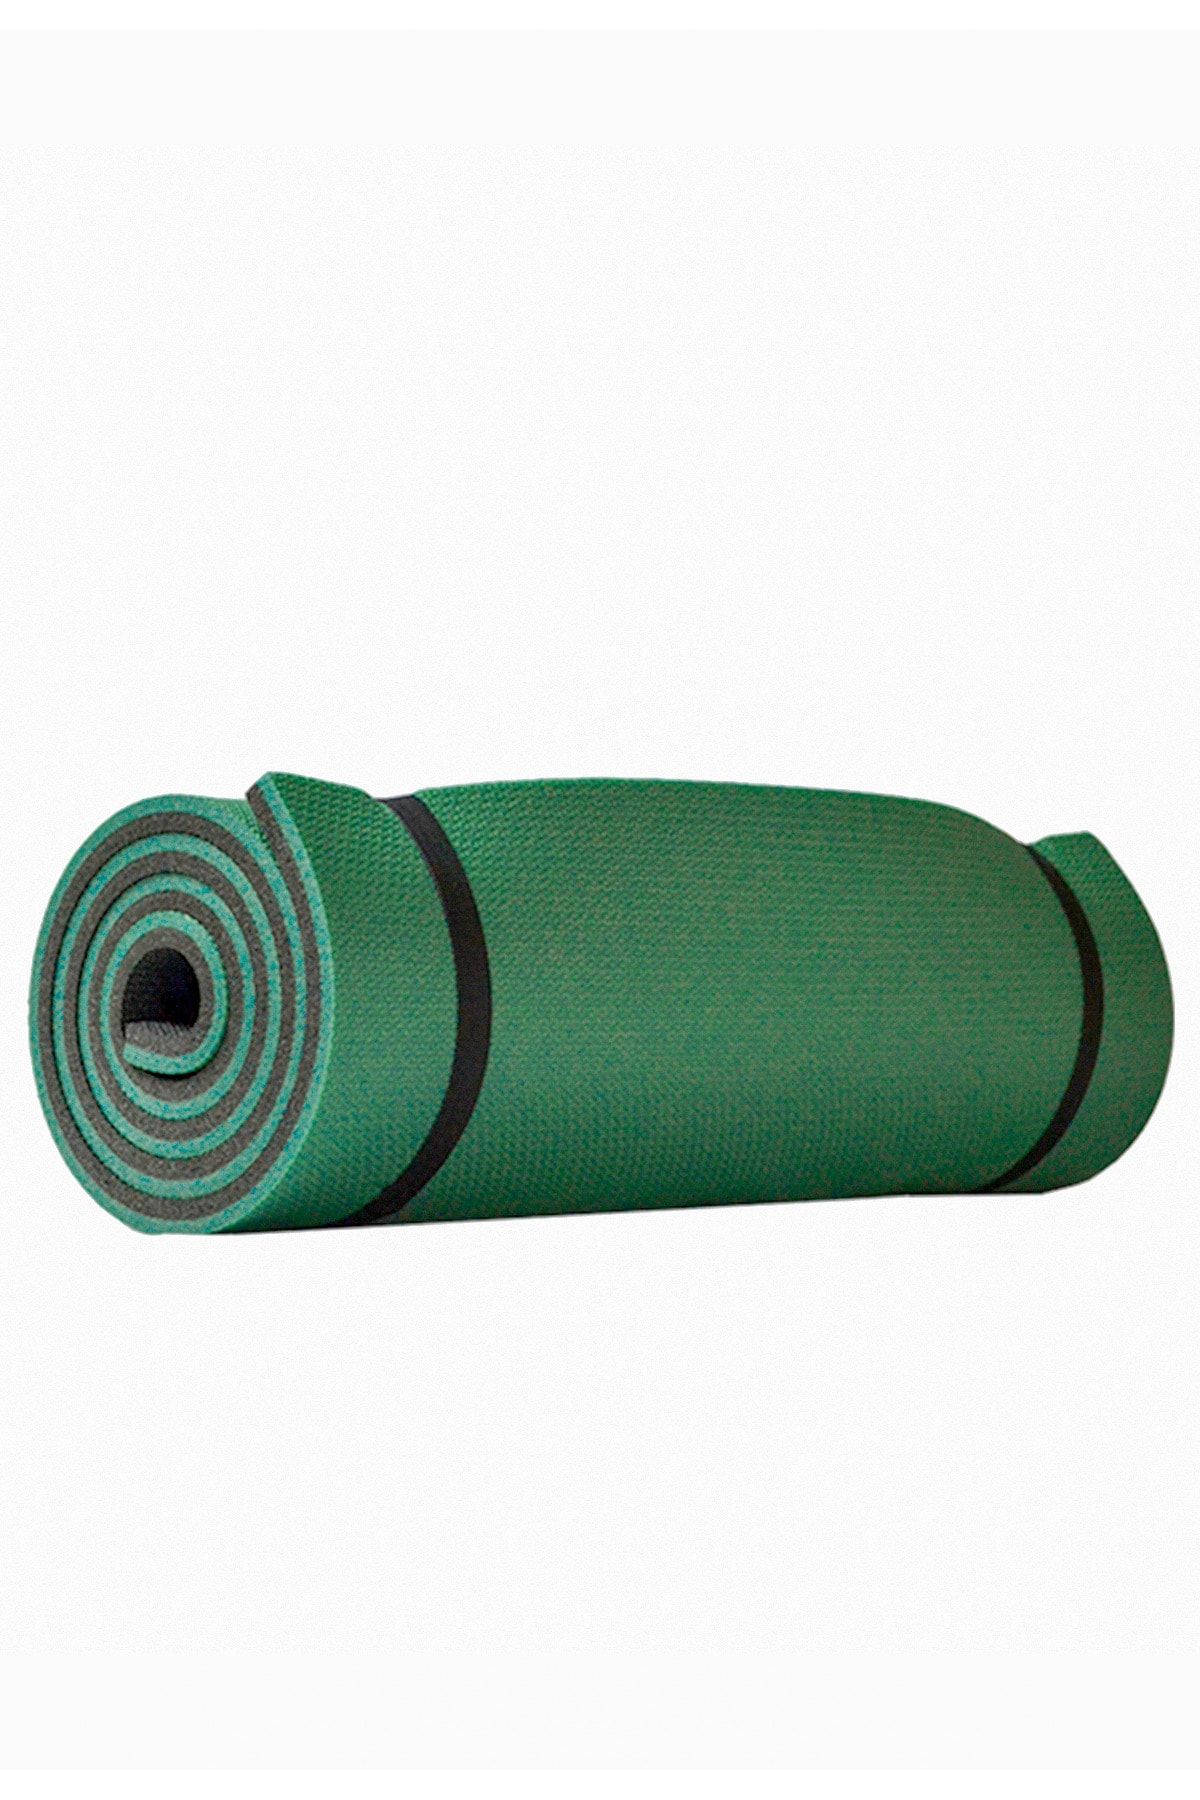 Attack Sport 16mm Pilates Minderi, Yeşil-siyah, Çift Taraflı 180 Cm X 60 Cm X 1,6 Cm